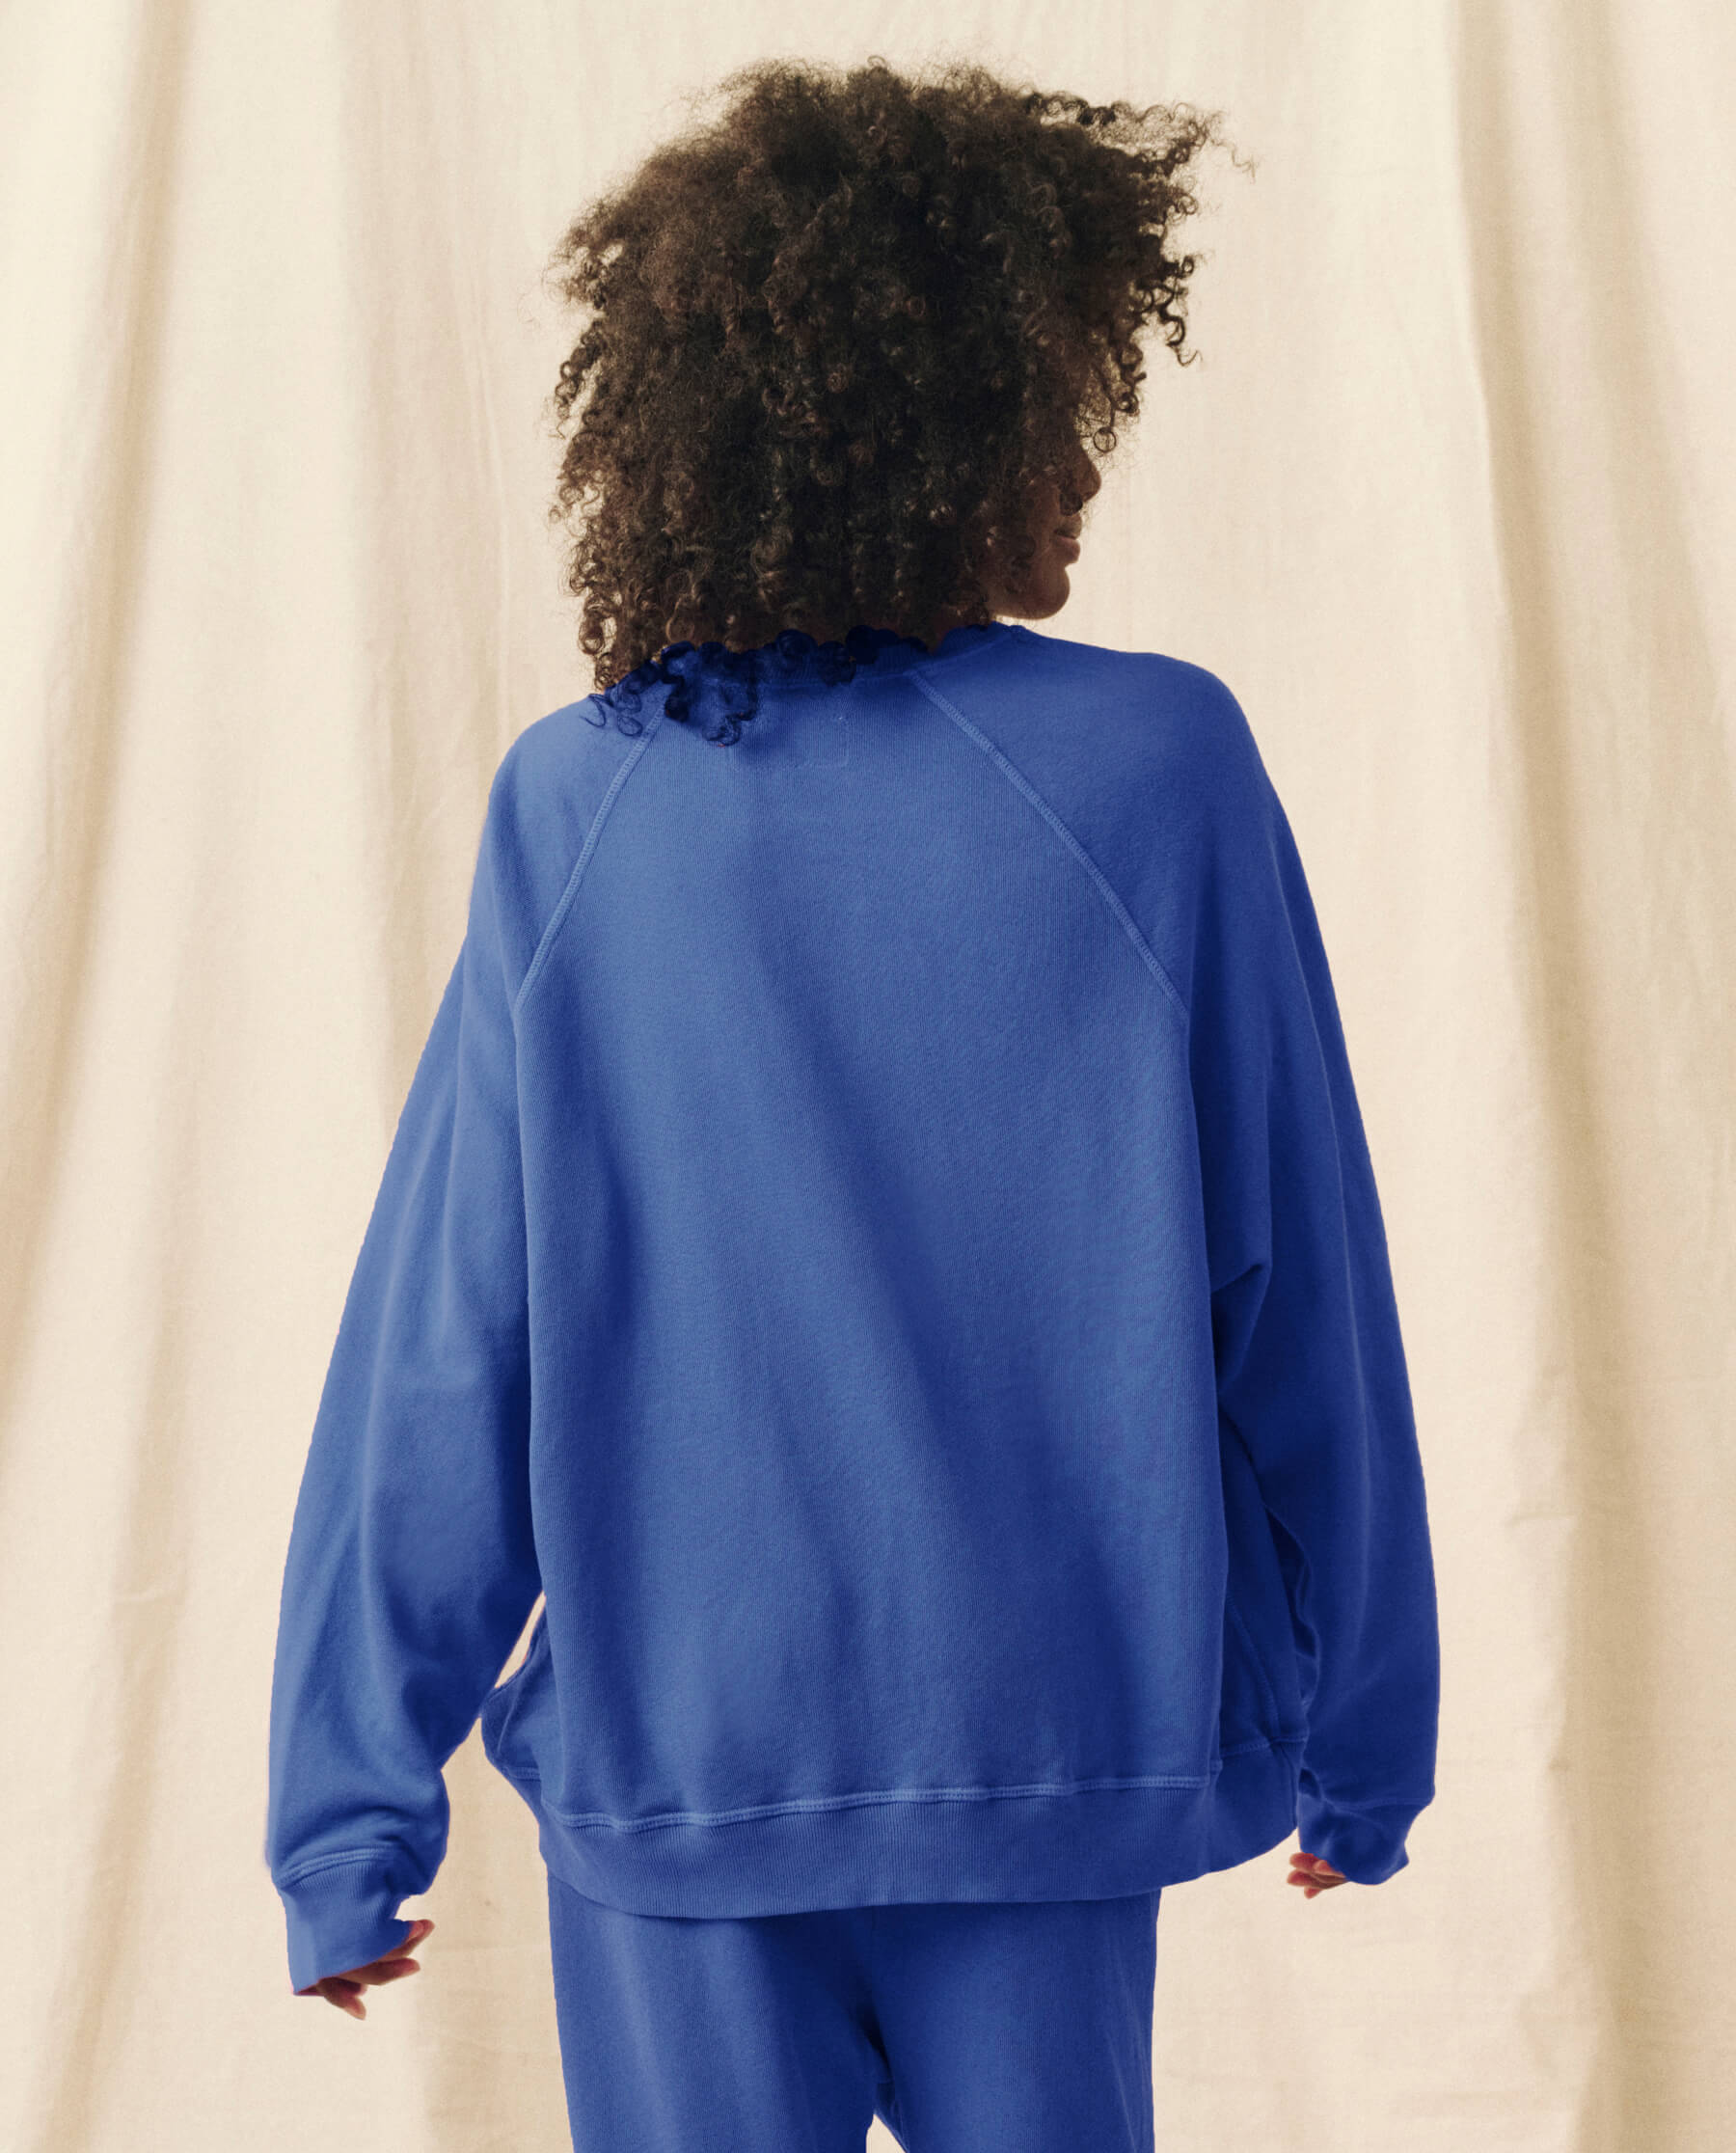 The Slouch Sweatshirt. Solid -- Cambridge Blue